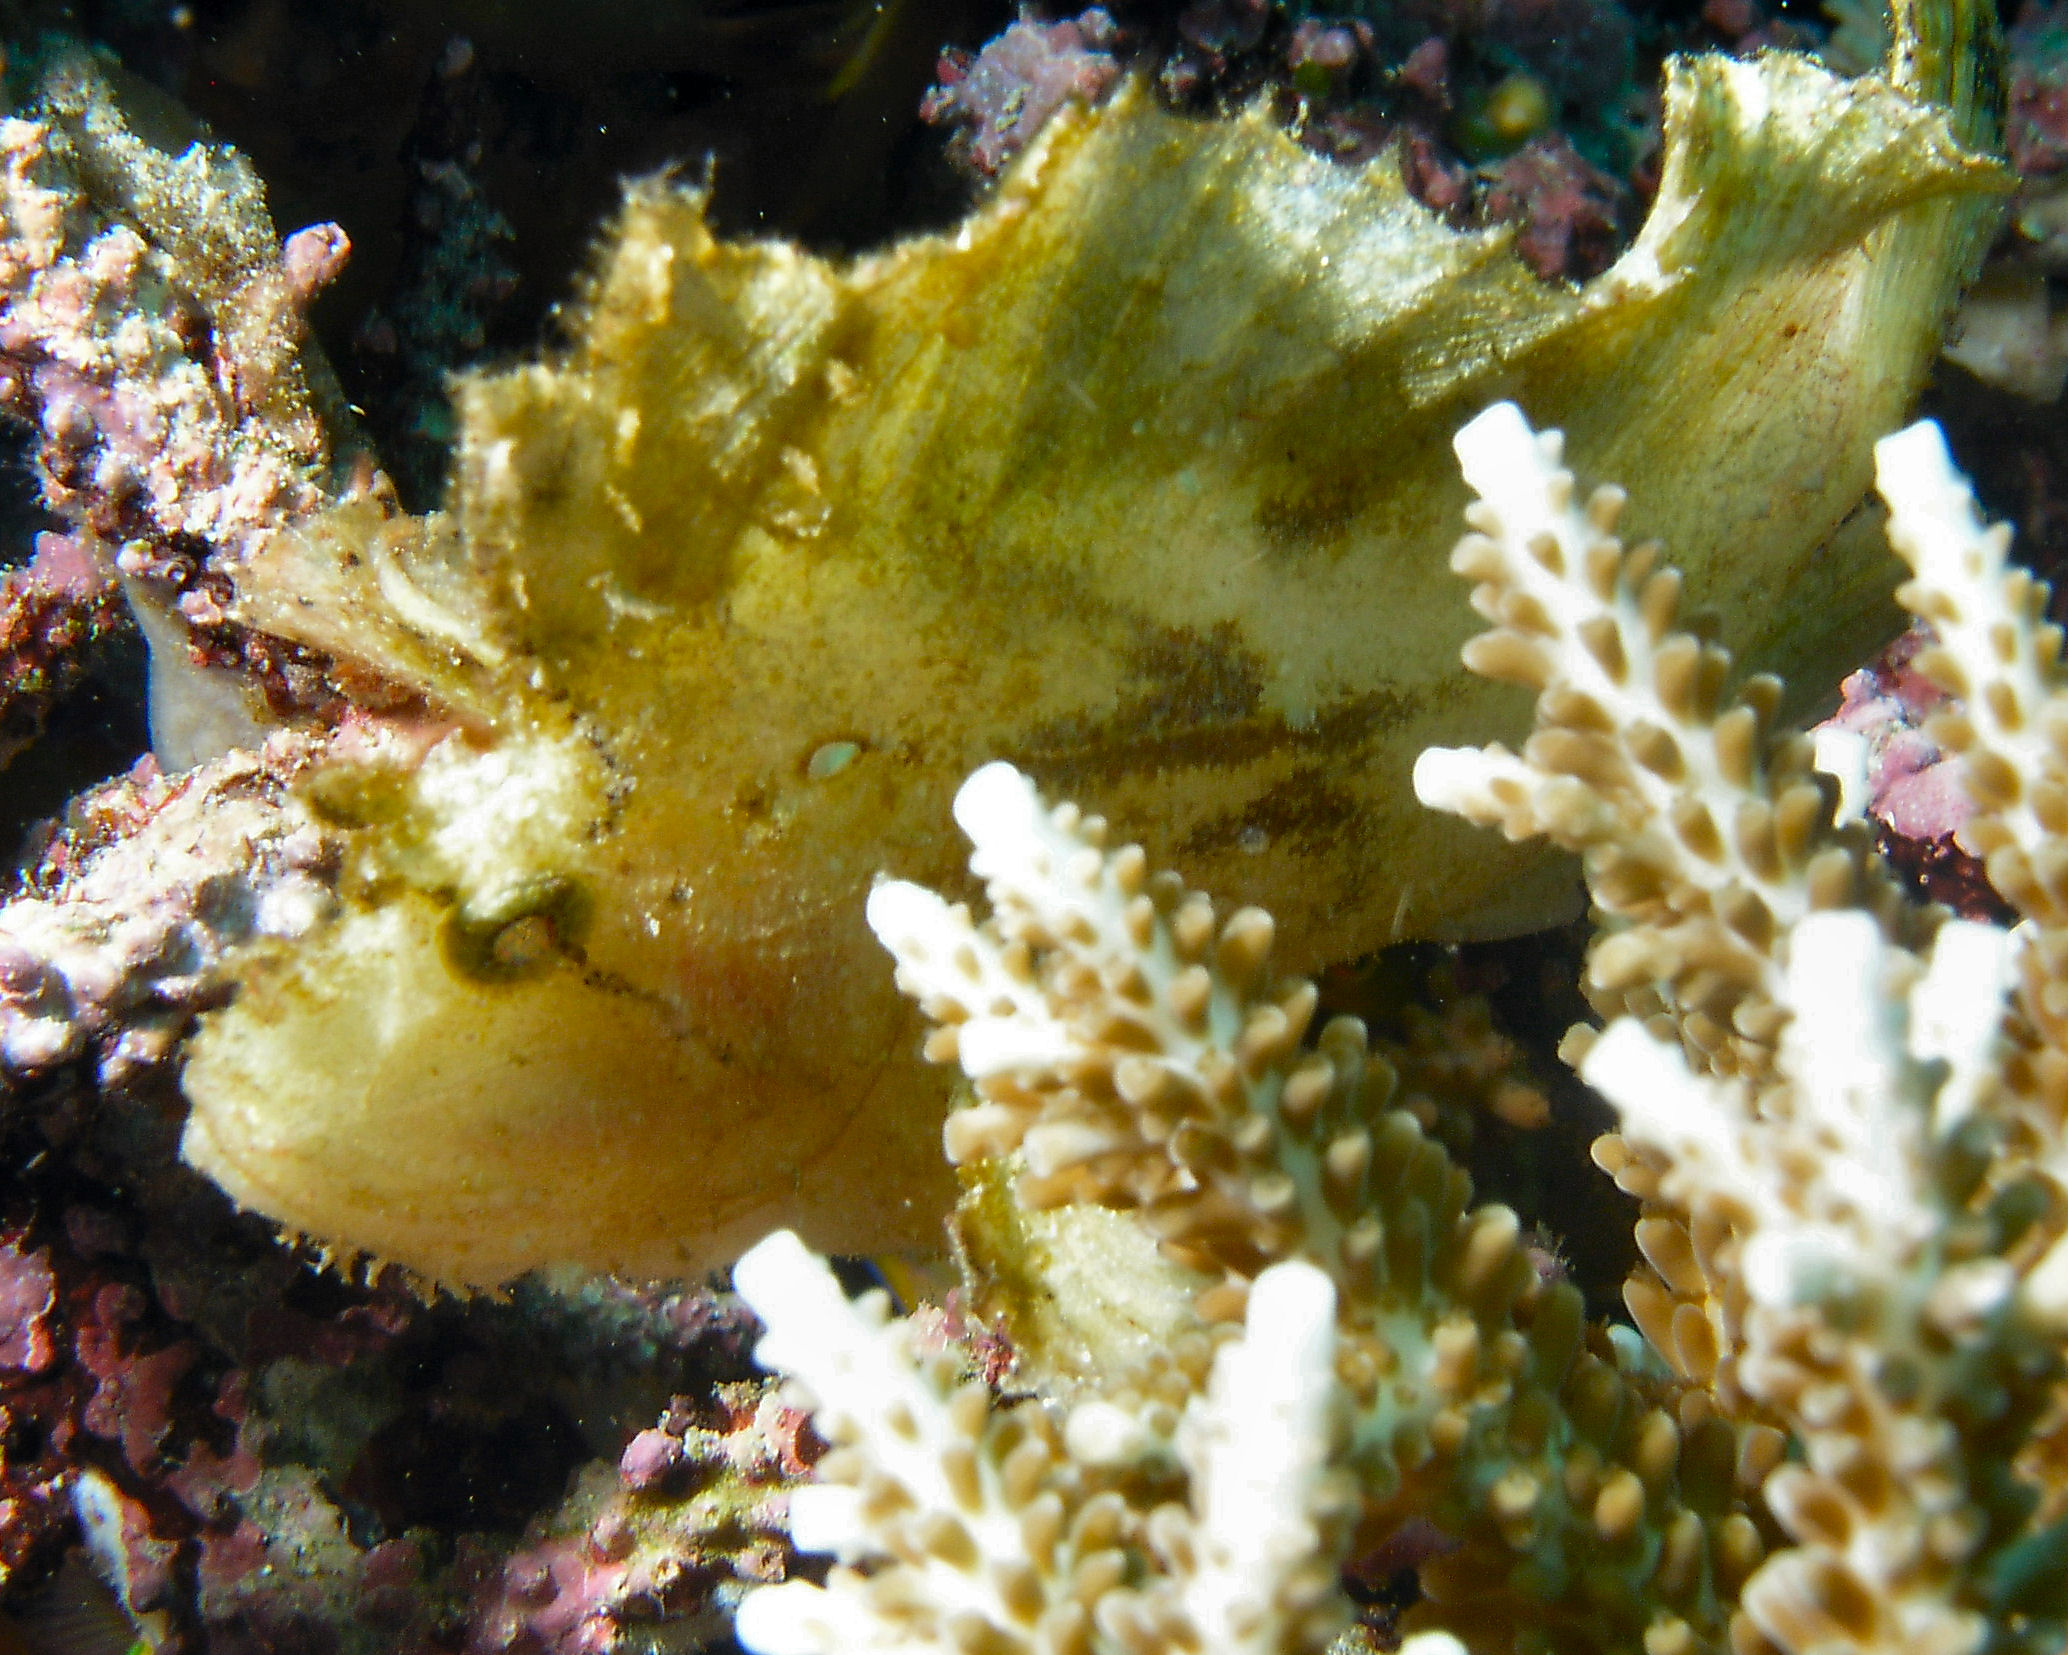 Yellow Leaf Scorpionfish